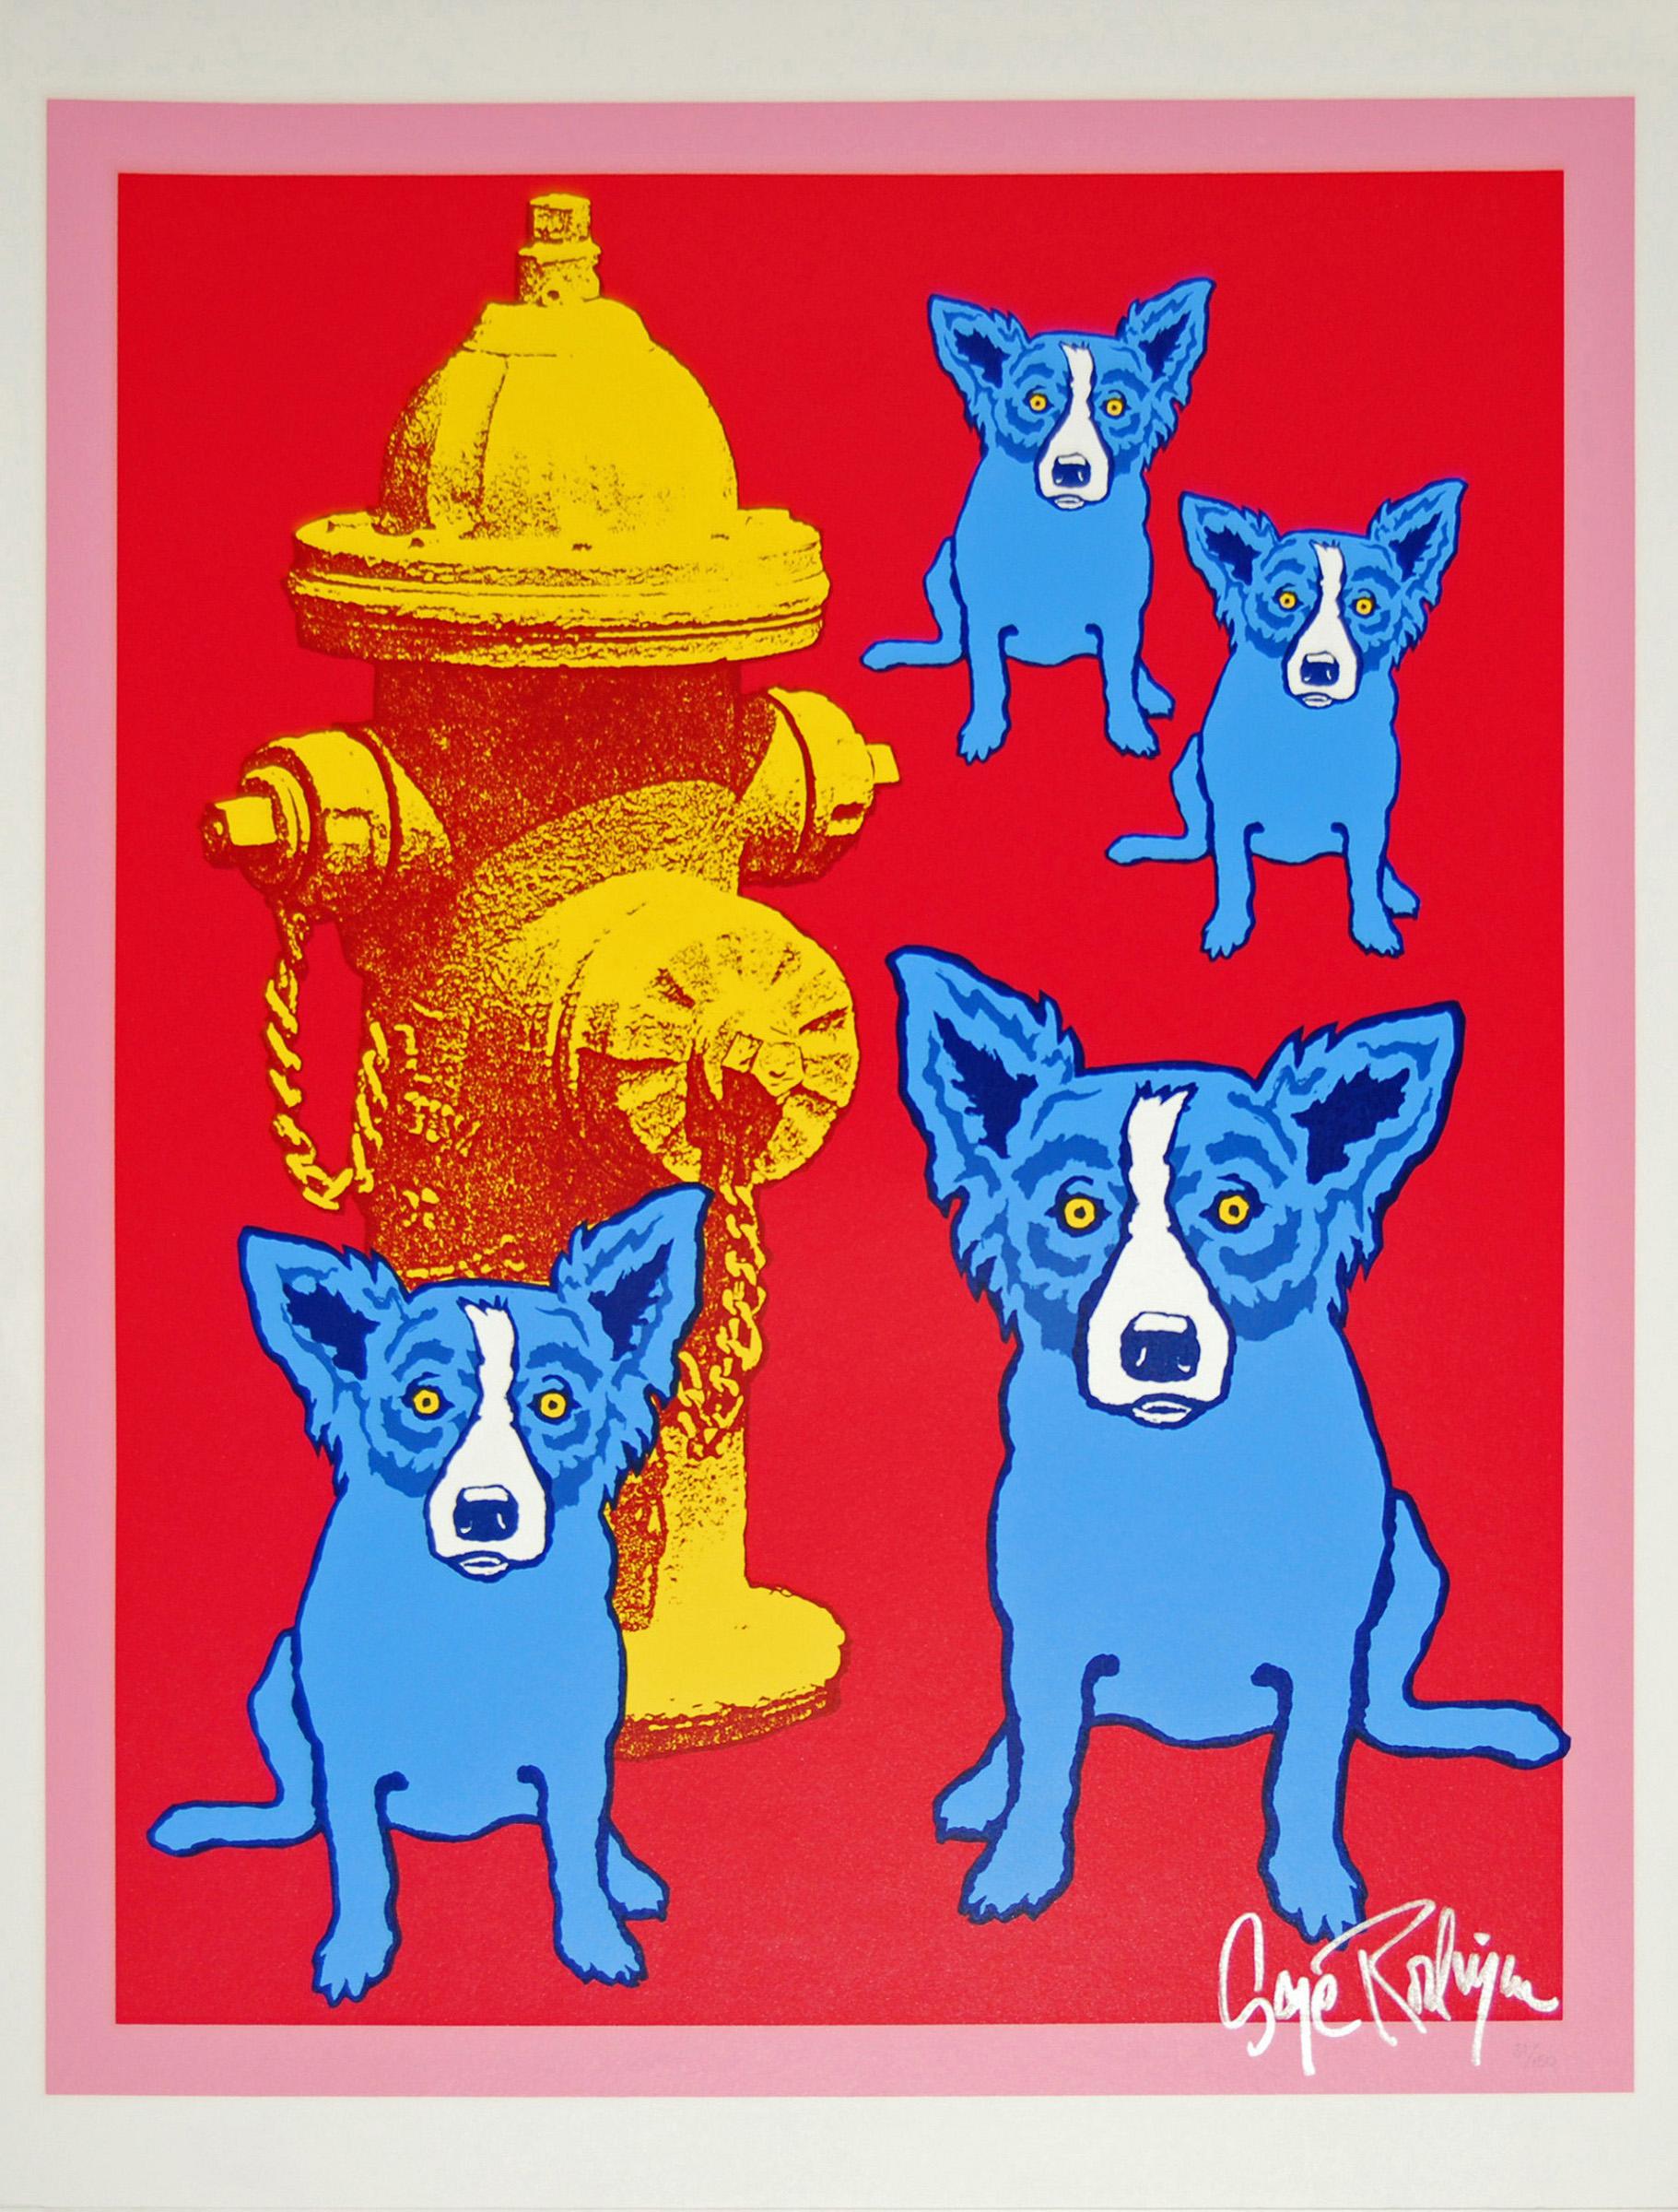 George Rodrigue Animal Print - Dog On Cherry Jello With Fireplug - Signed Silkscreen Print Blue Dog